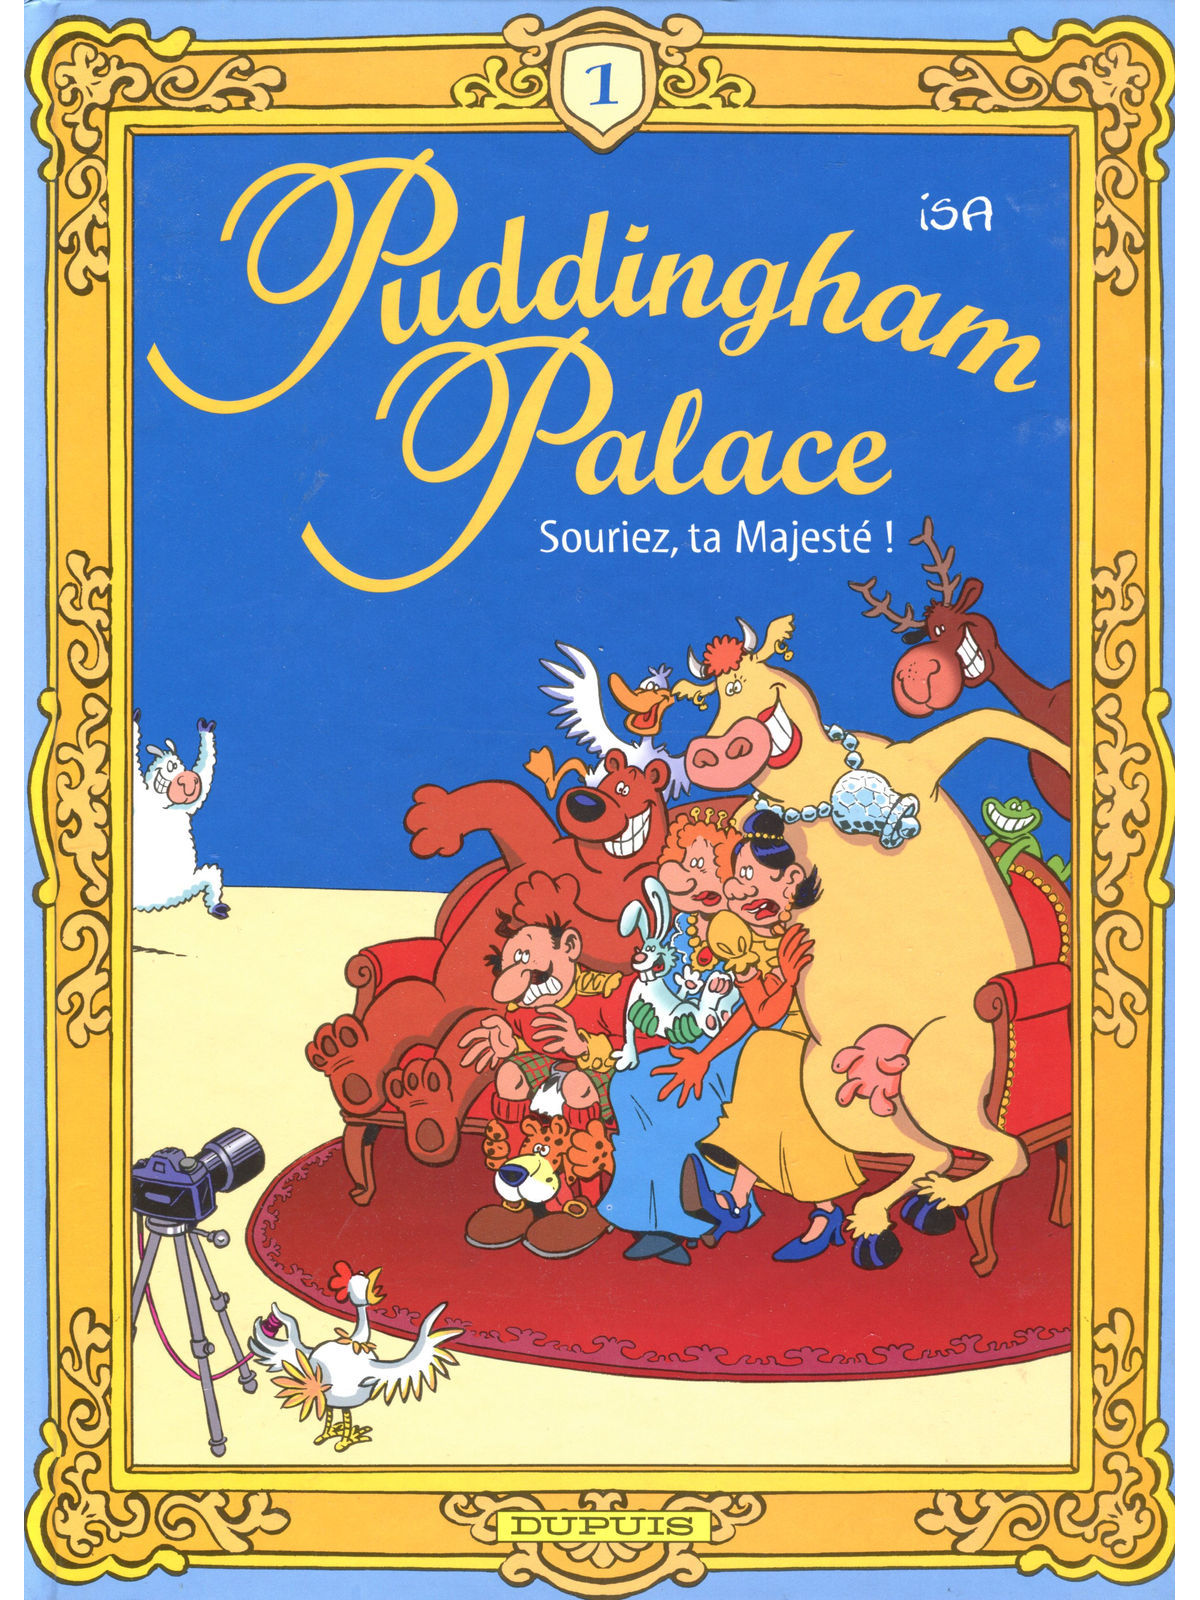 puddingham palace